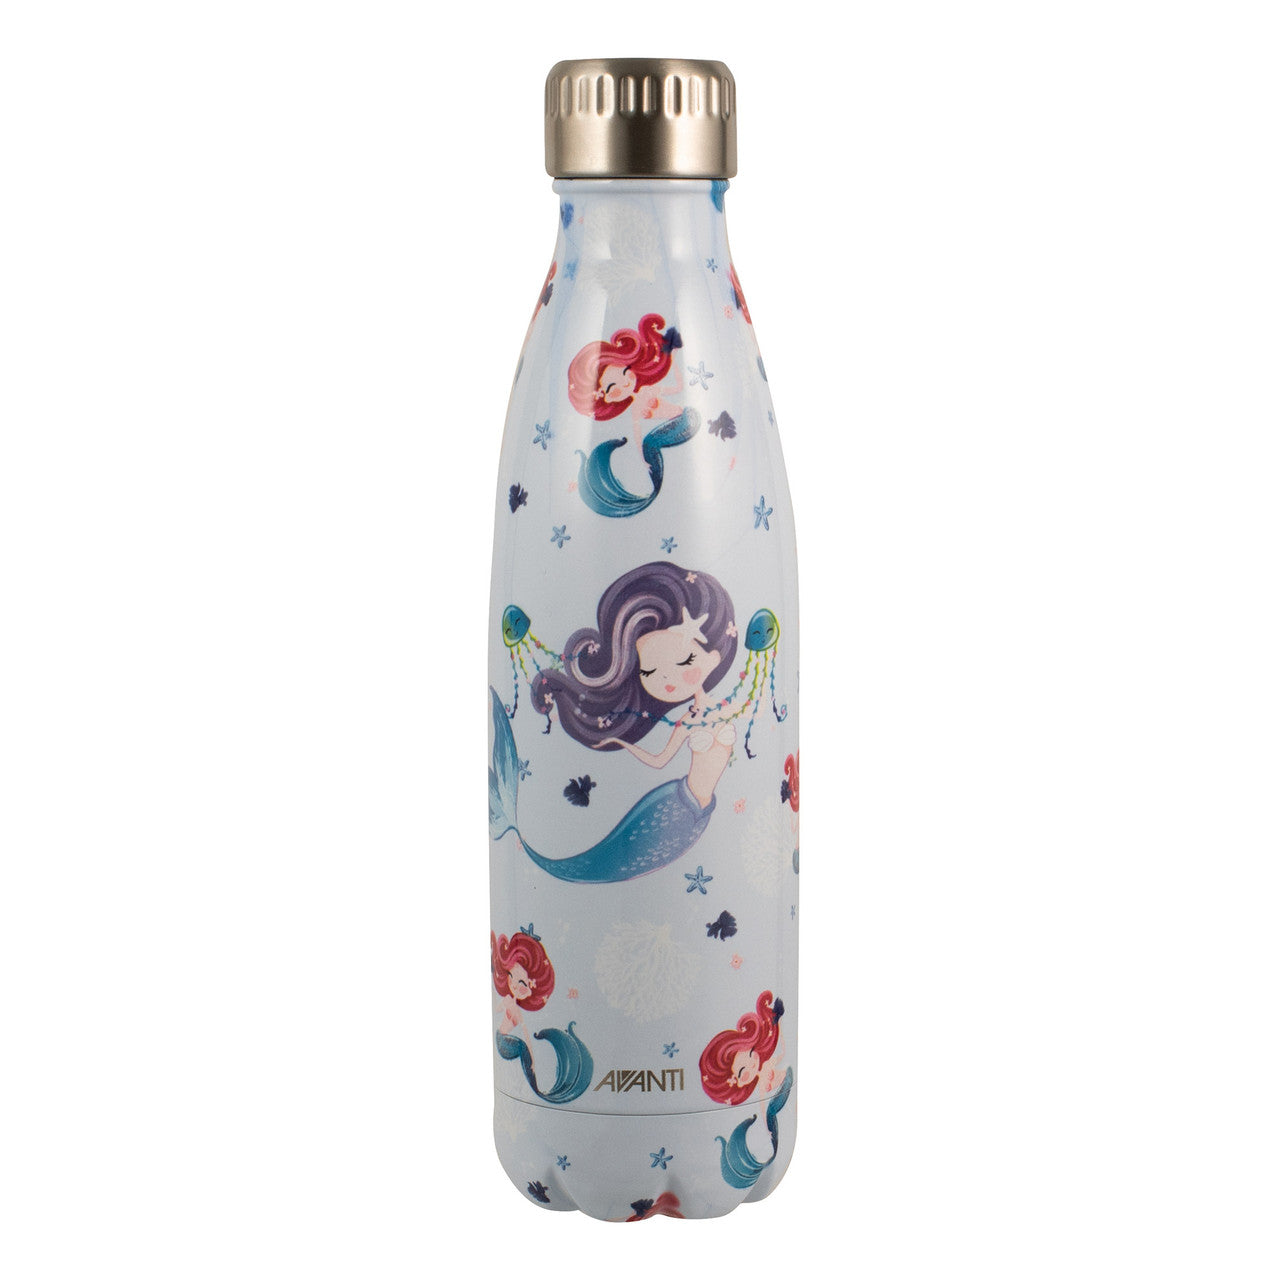 Avanti 500ml Fluid Vacuum Bottle - Mermaid Melody